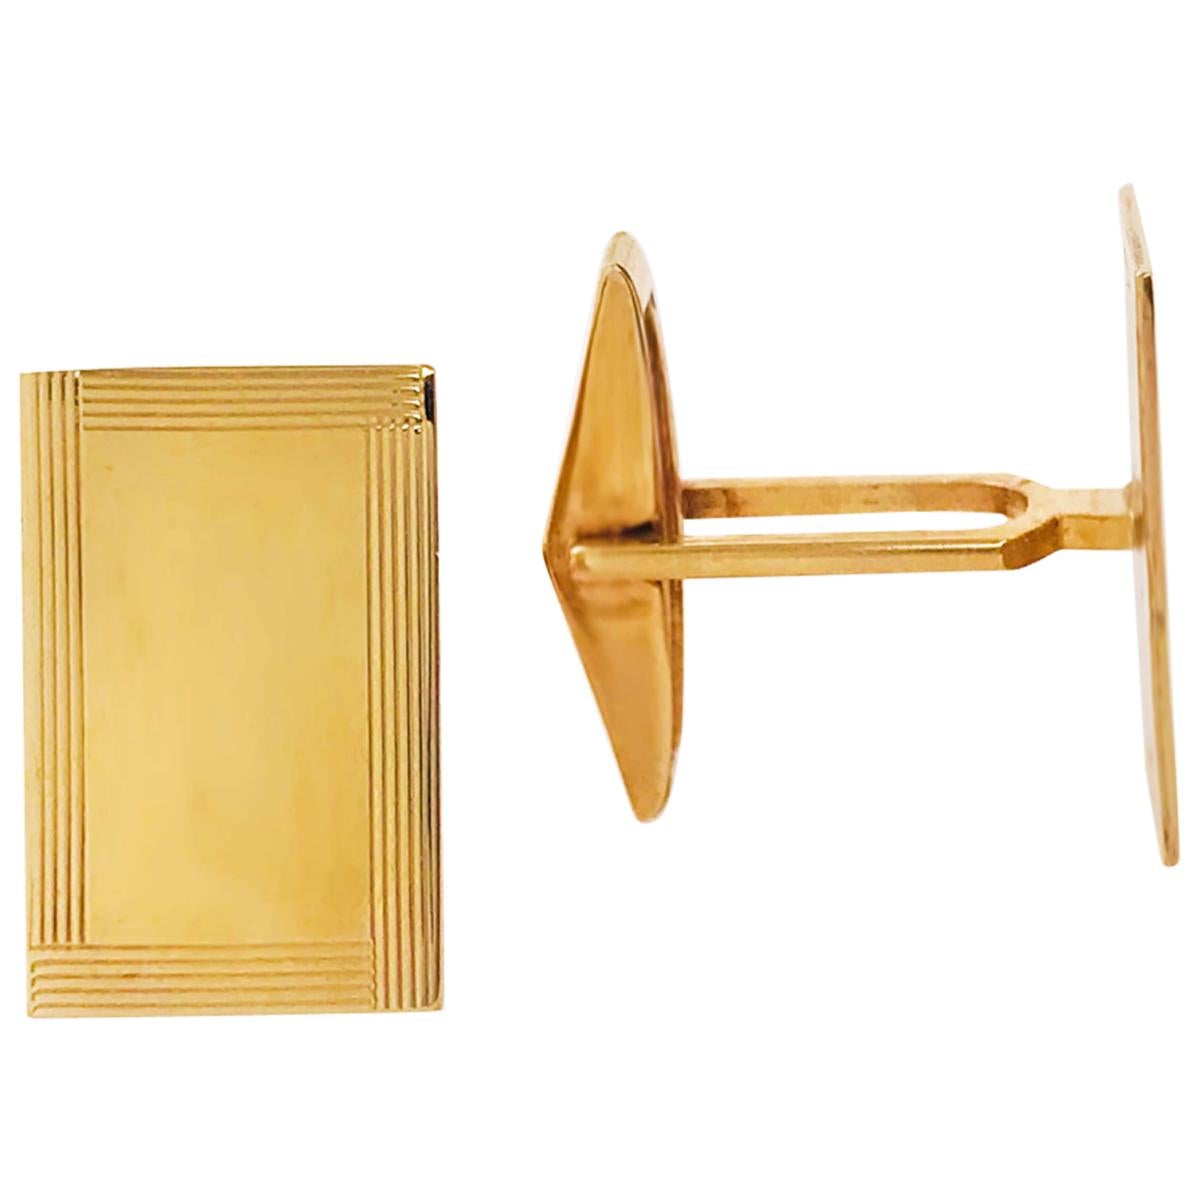 Gold Engraving Plate Cufflinks, Men's Cufflinks with Rectangle 14k Gold Plate